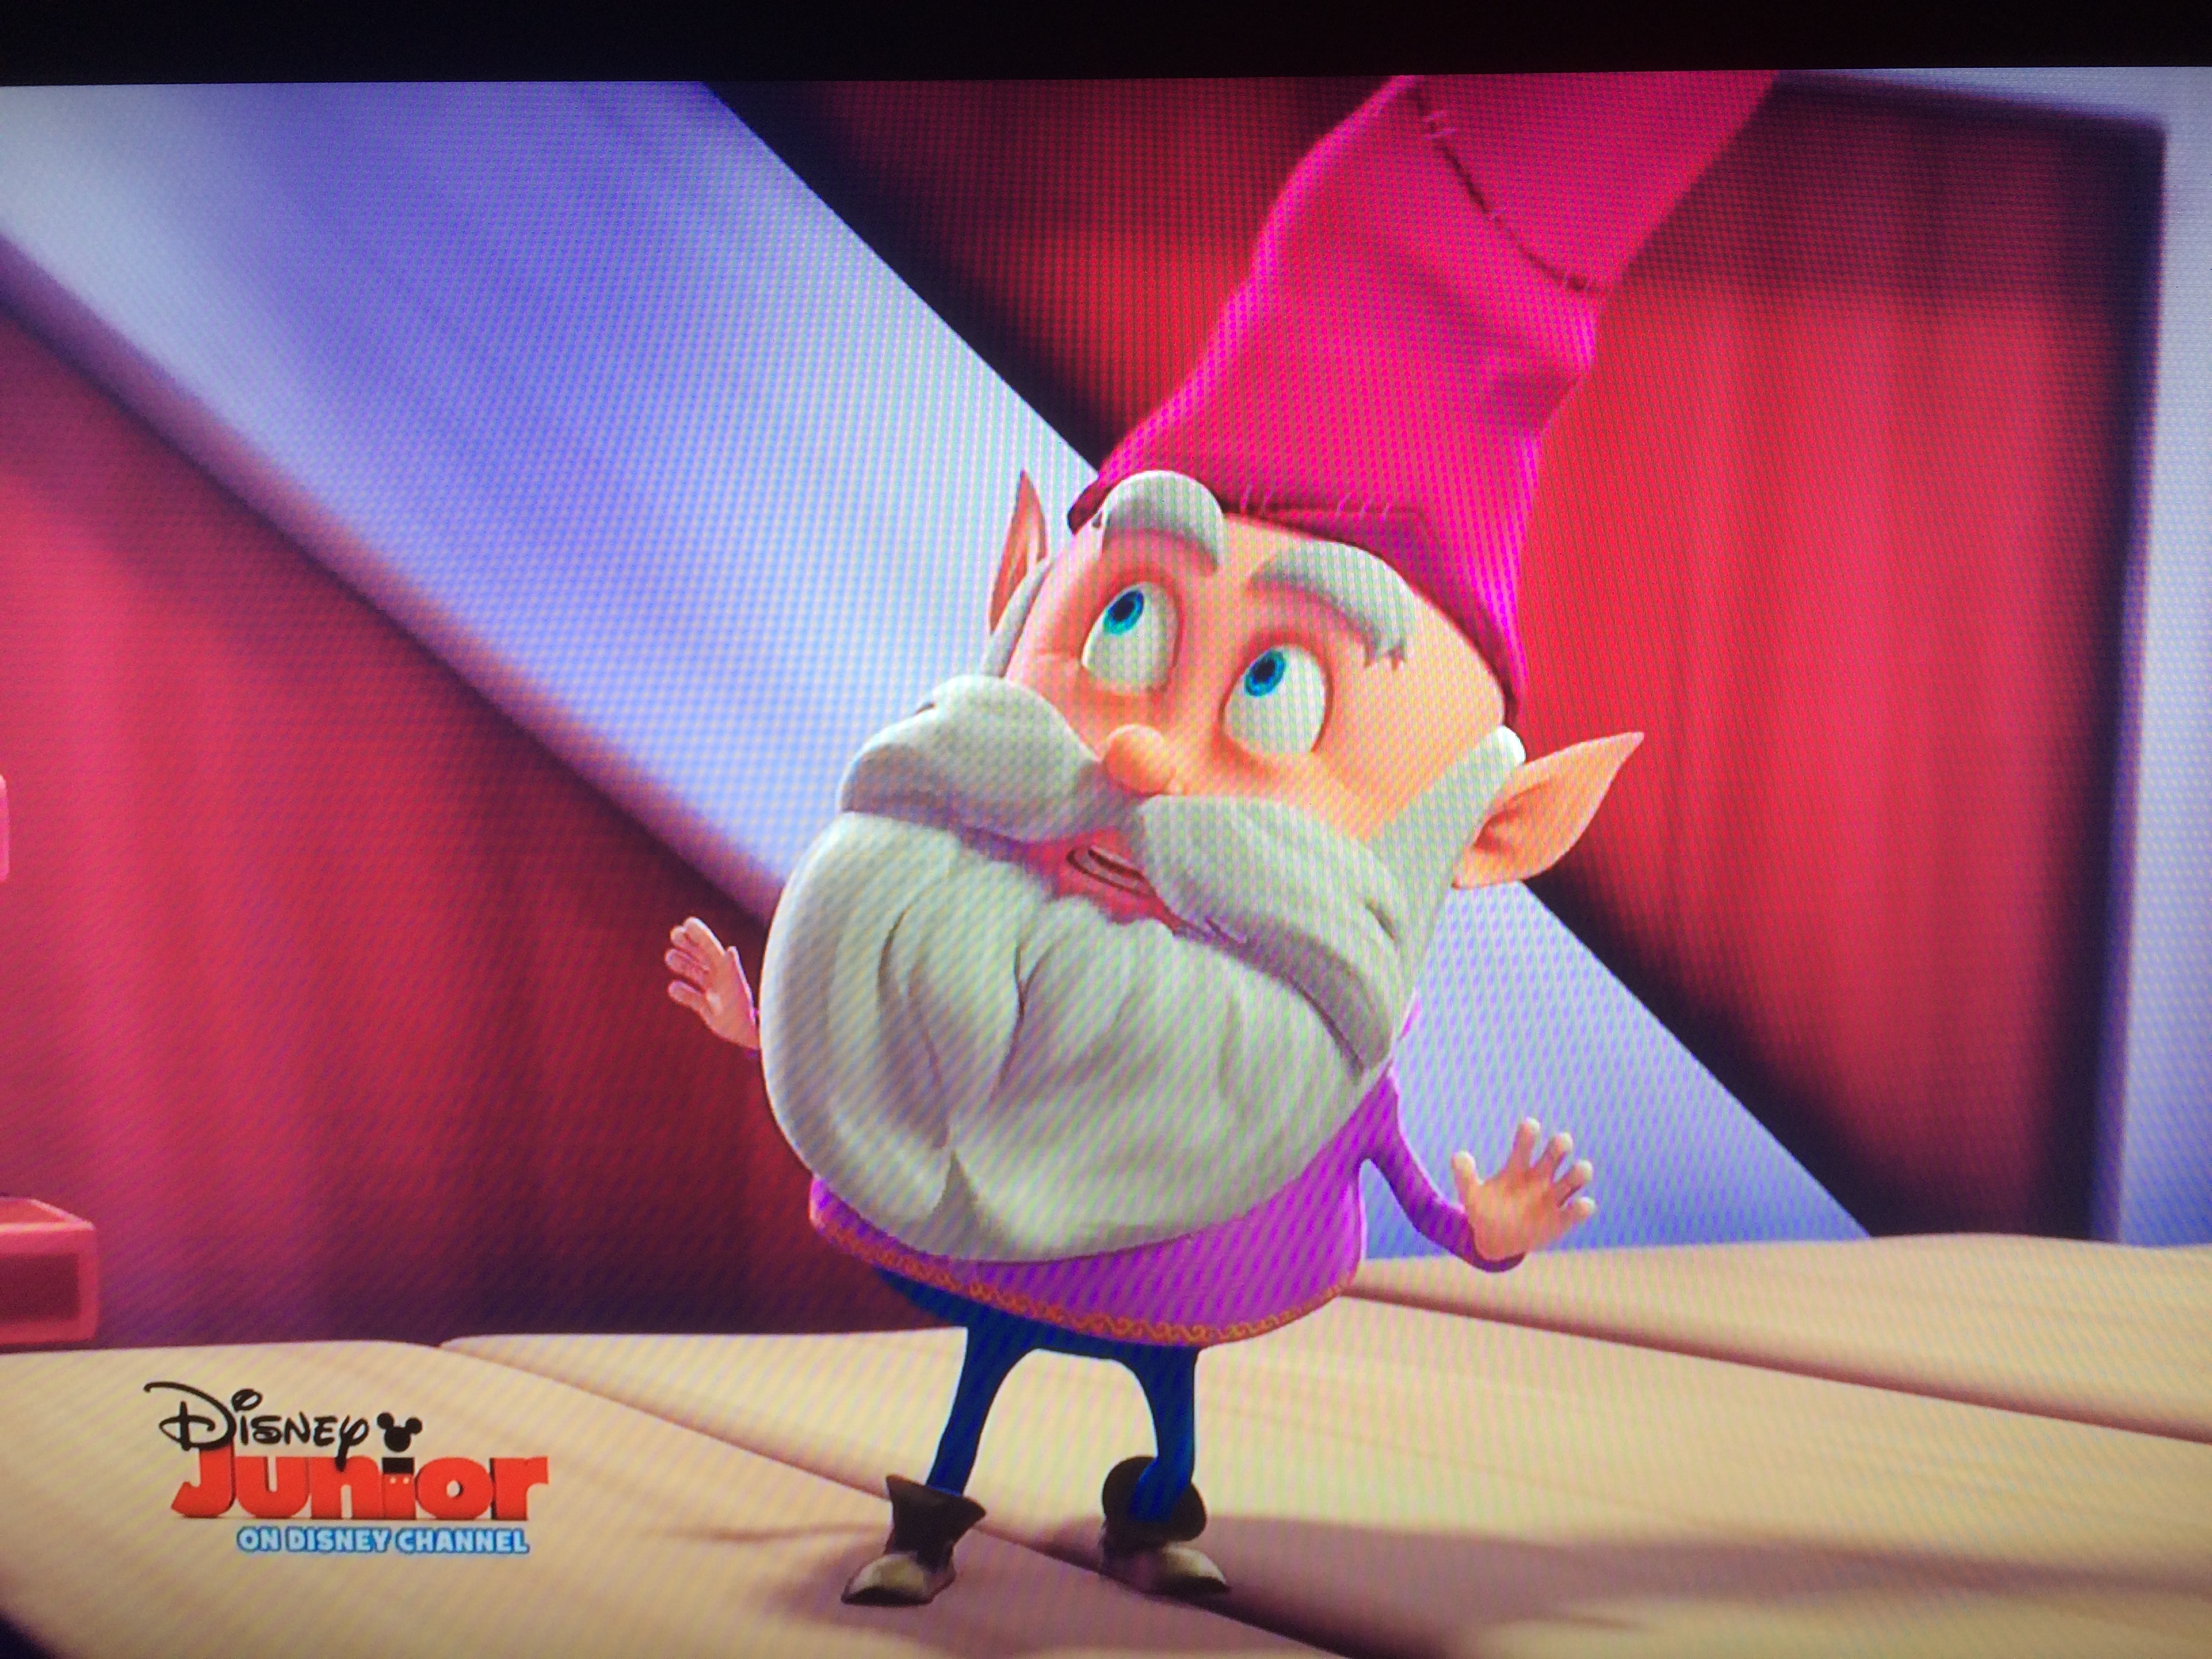 David Lodge stars as the Magic Gnome on Disney Jr.'s Hit show Goldie & Bear!